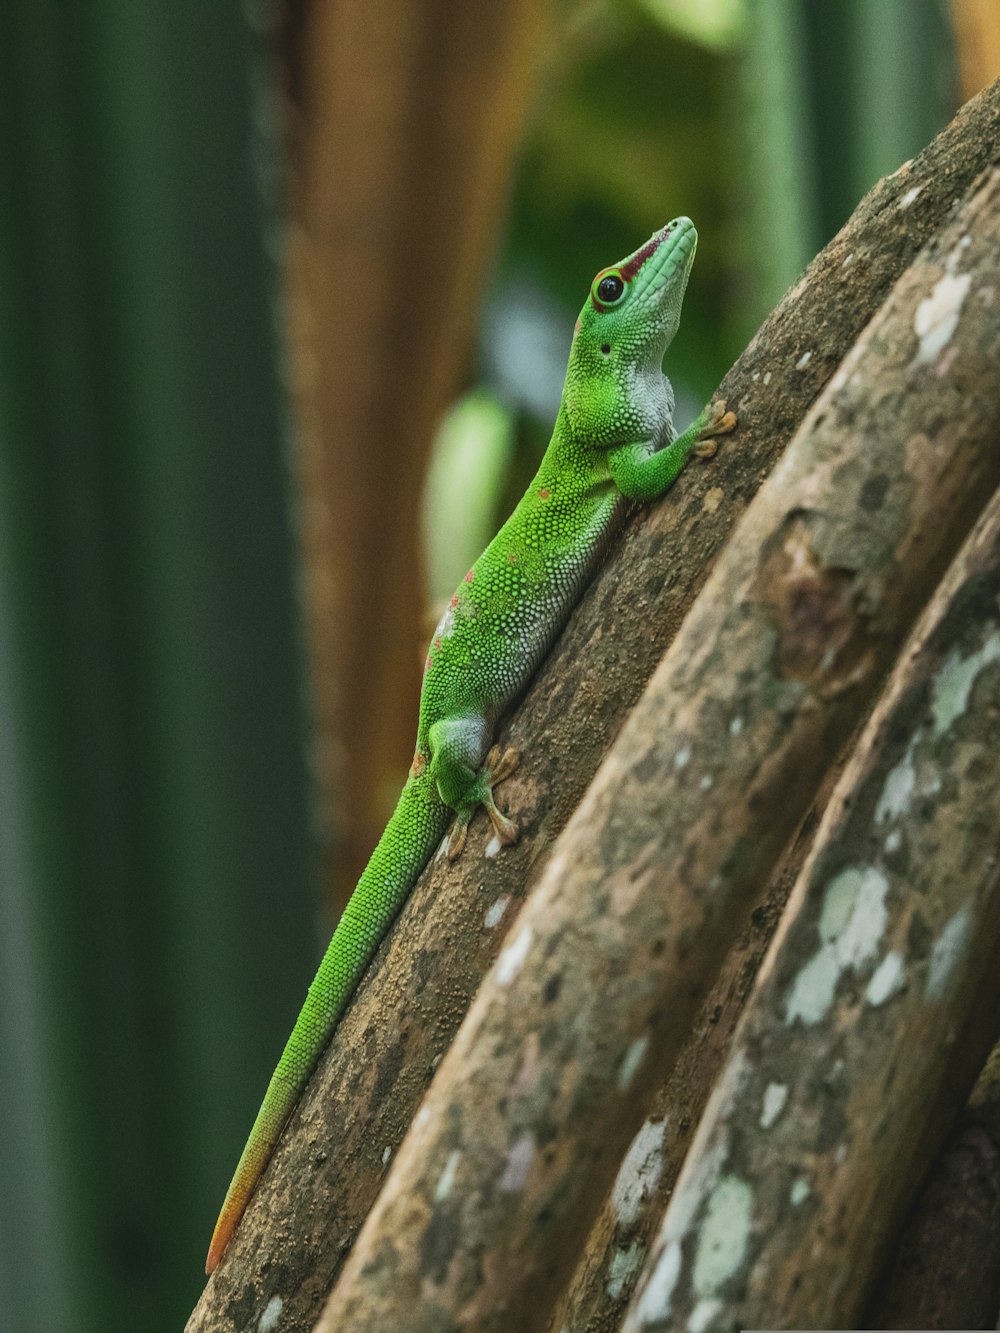 a green lizard on a tree branch